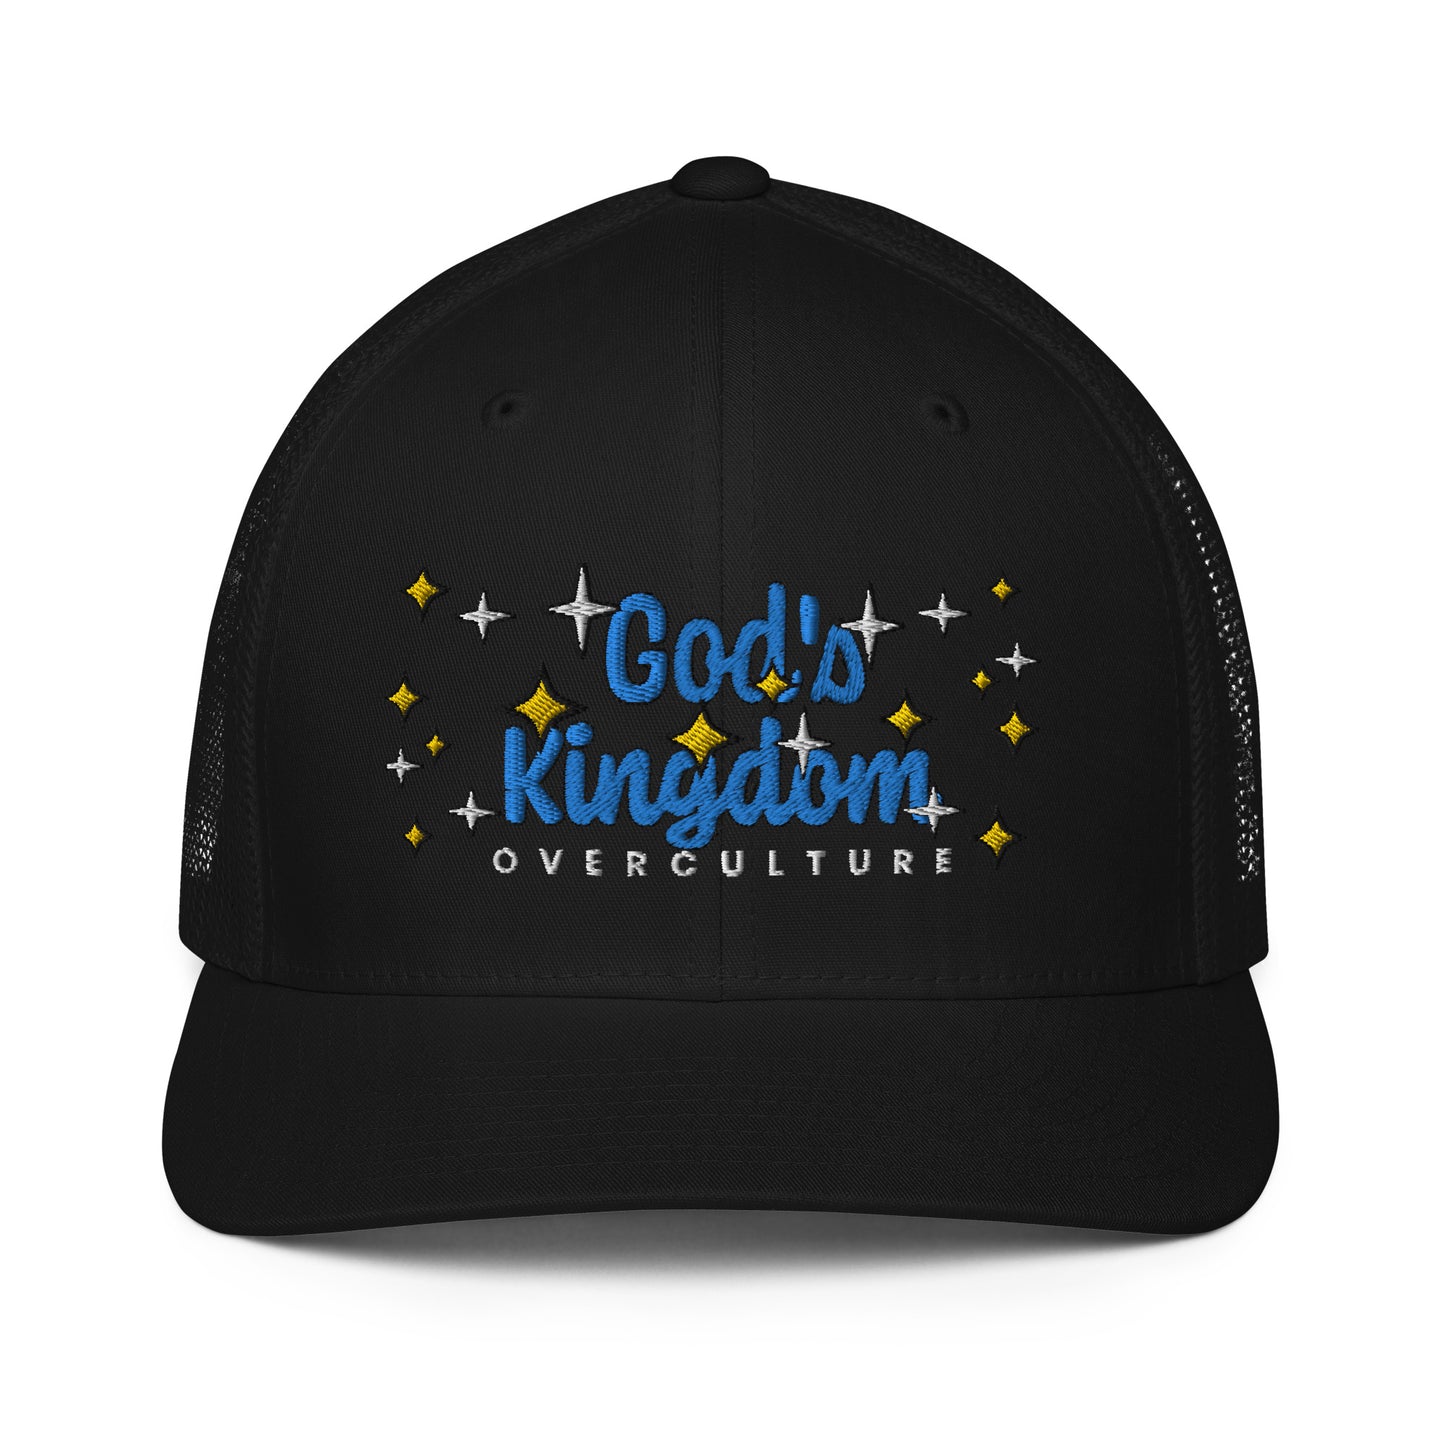 God's Kingdom- Closed-back trucker cap